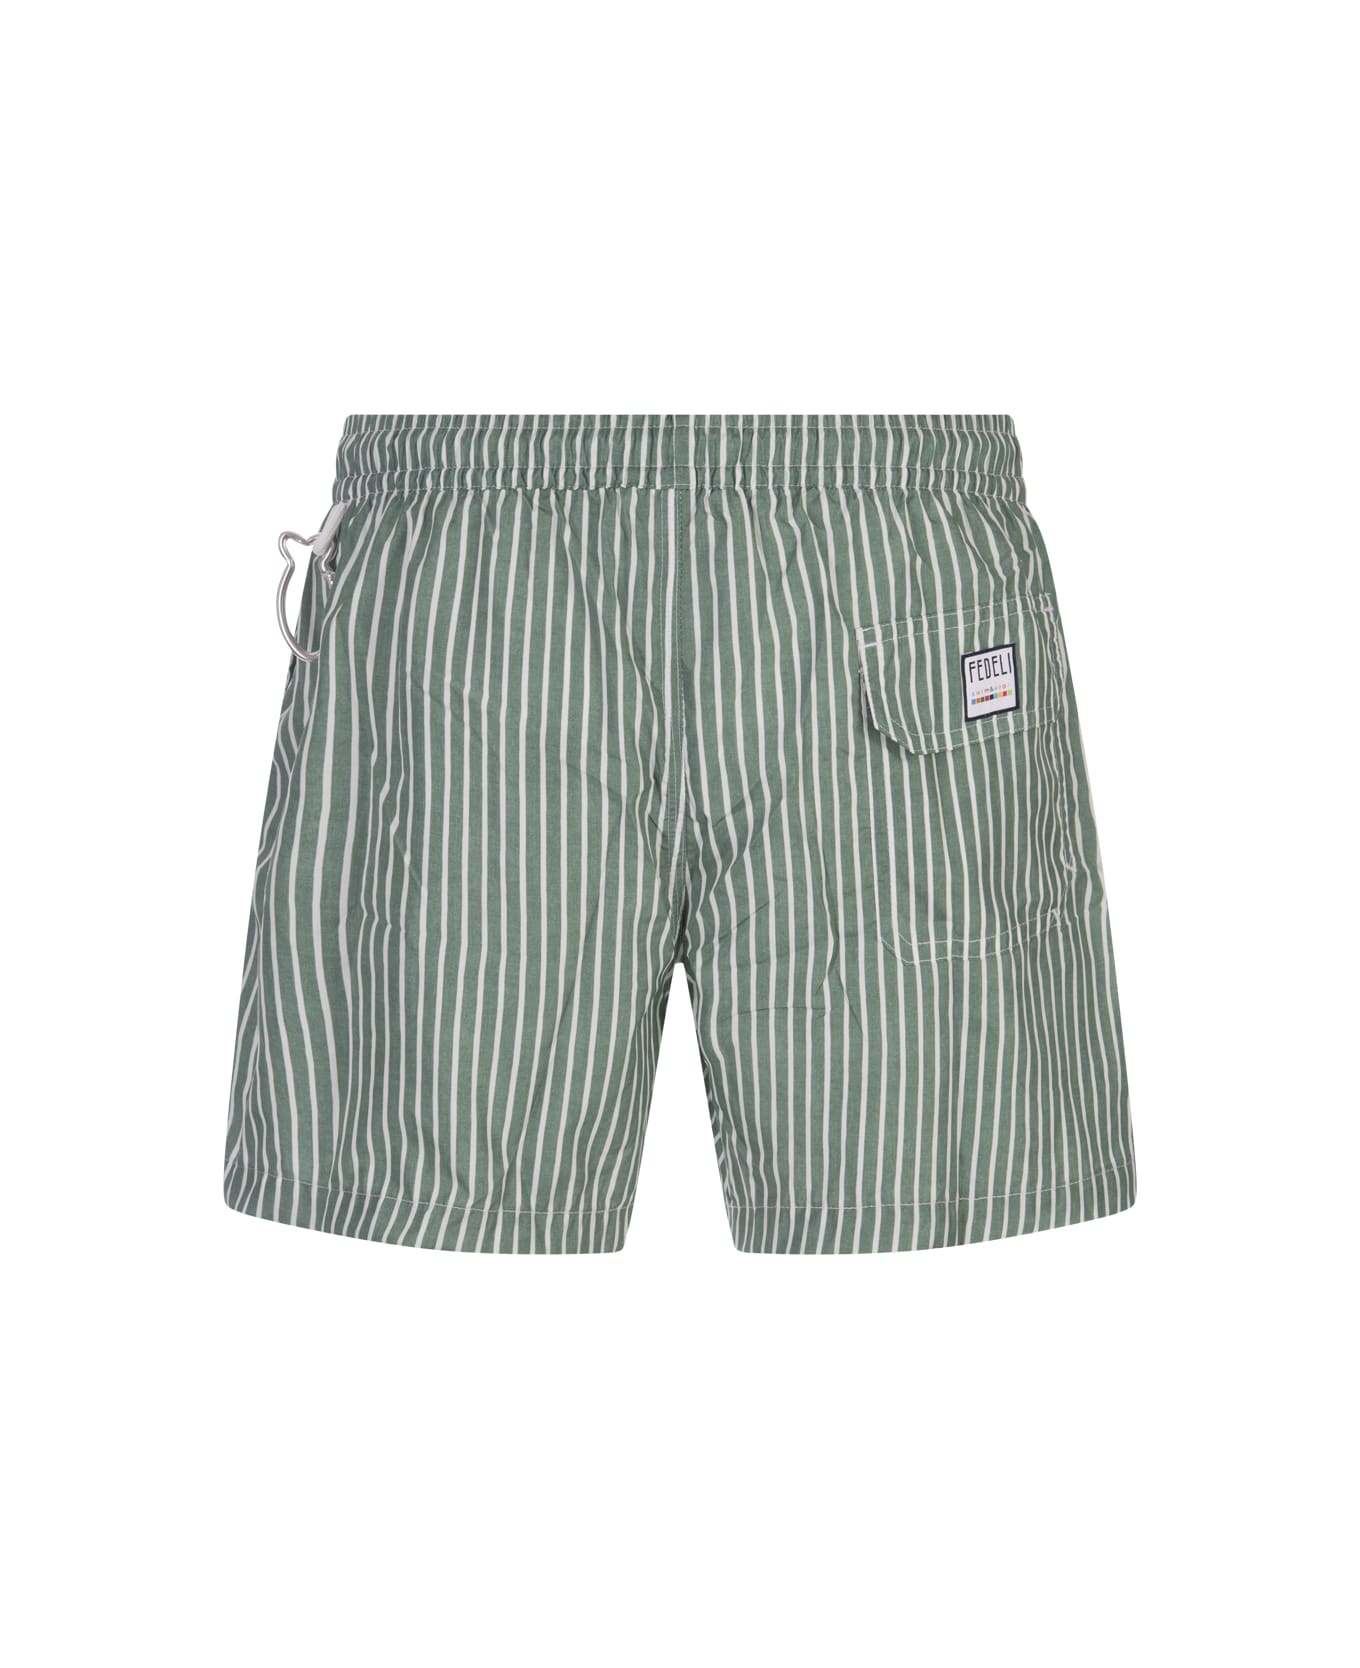 Fedeli Green And White Striped Swim Shorts - Green スイムトランクス